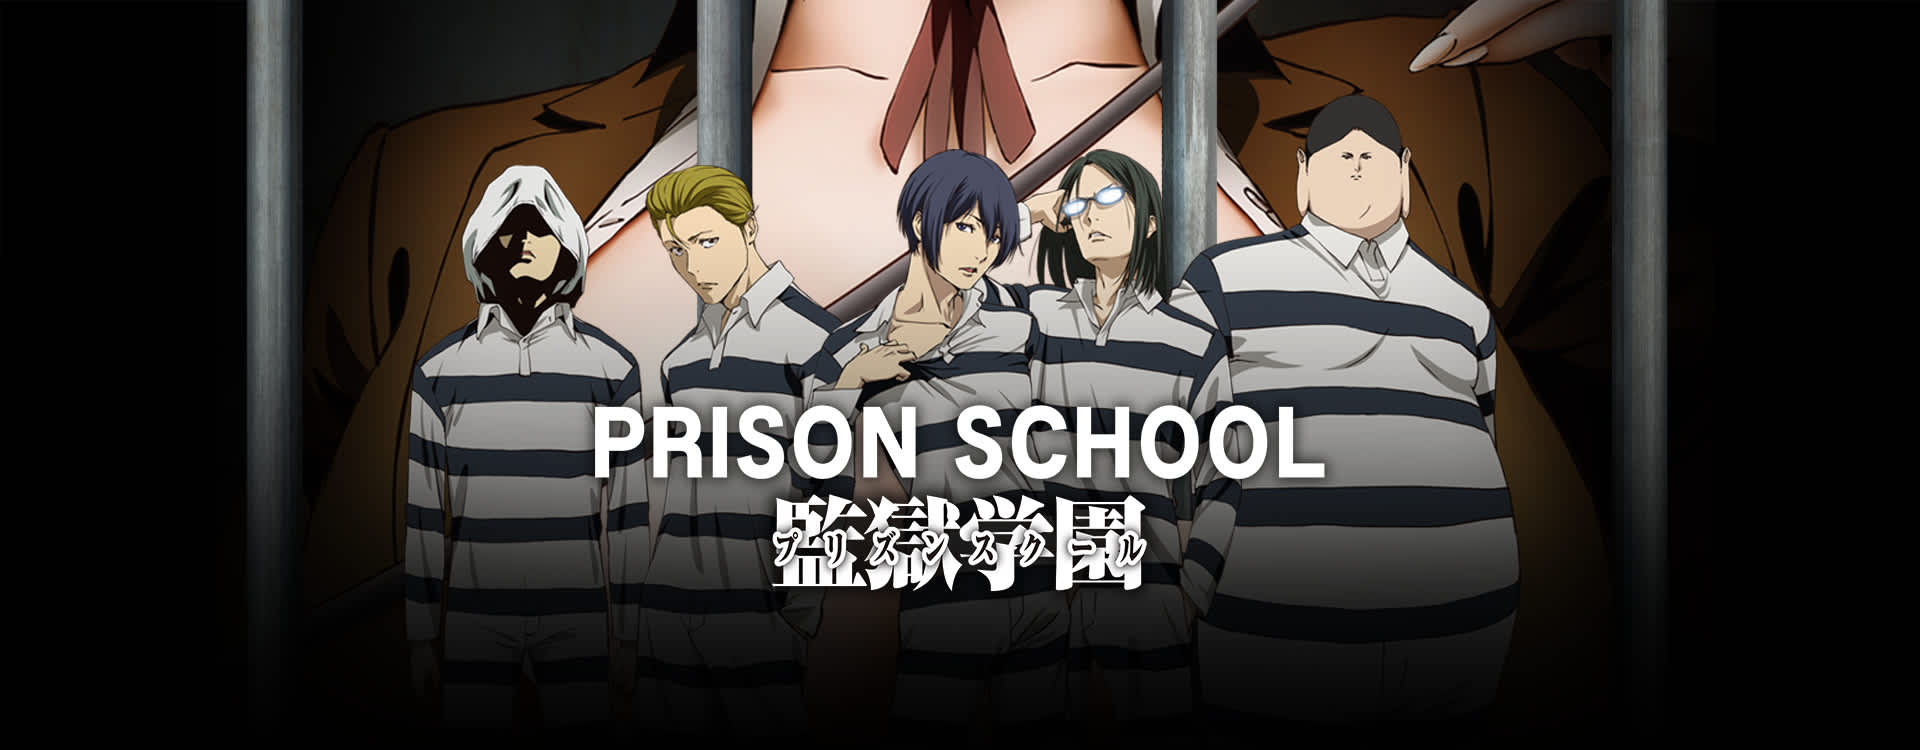 nonton streaming prison school episode 1 sub indos